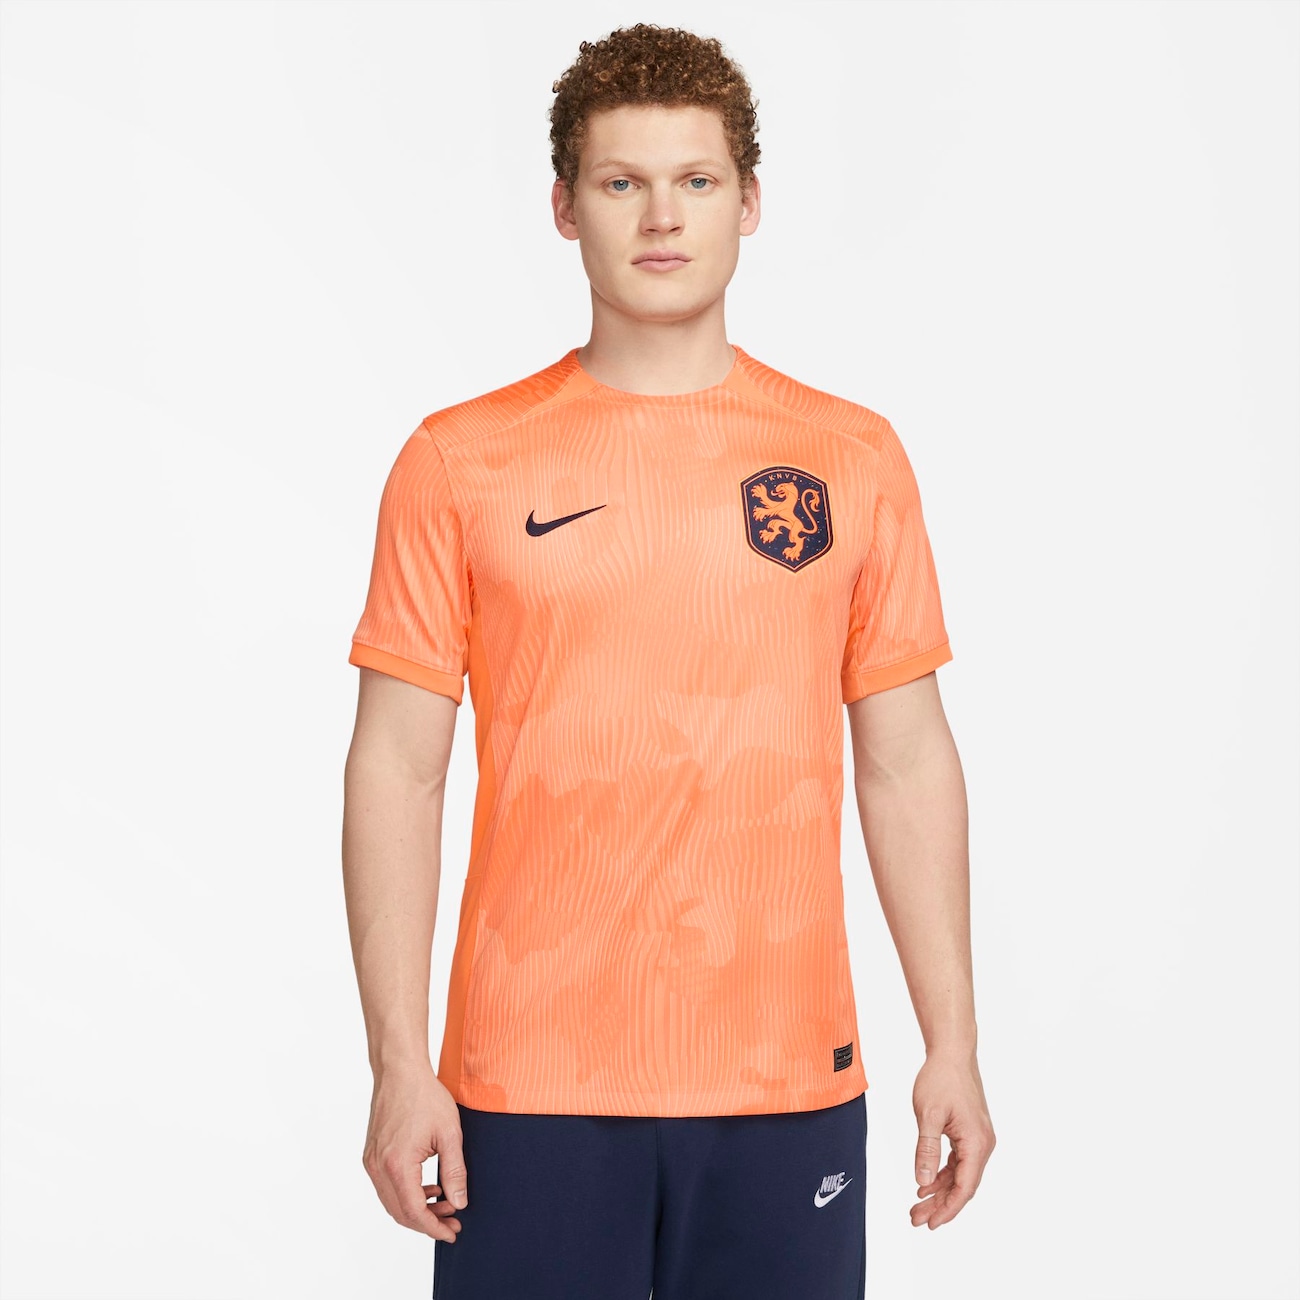 Nederland 2023 Stadium Thuis Nike Dri-FIT voetbalshirt voor heren - Oranje